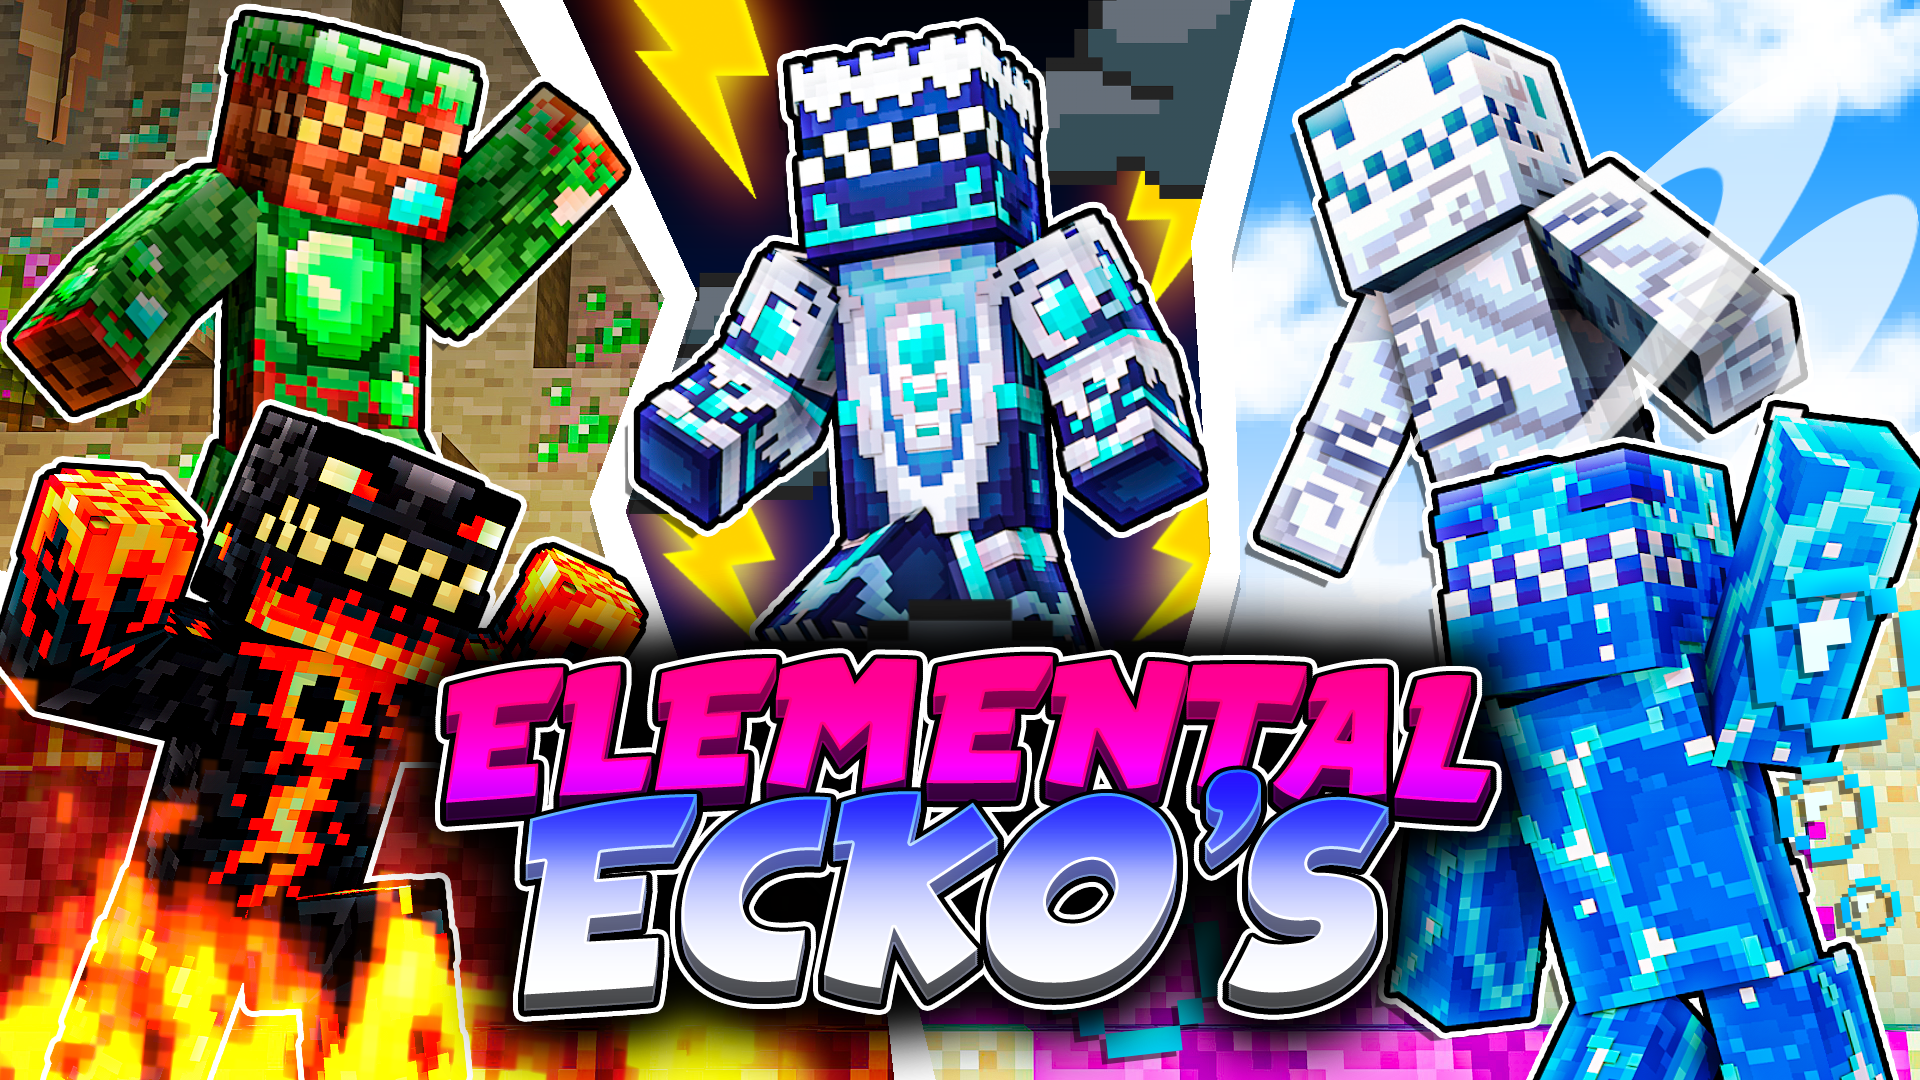 Elemental Ecko's Keyart